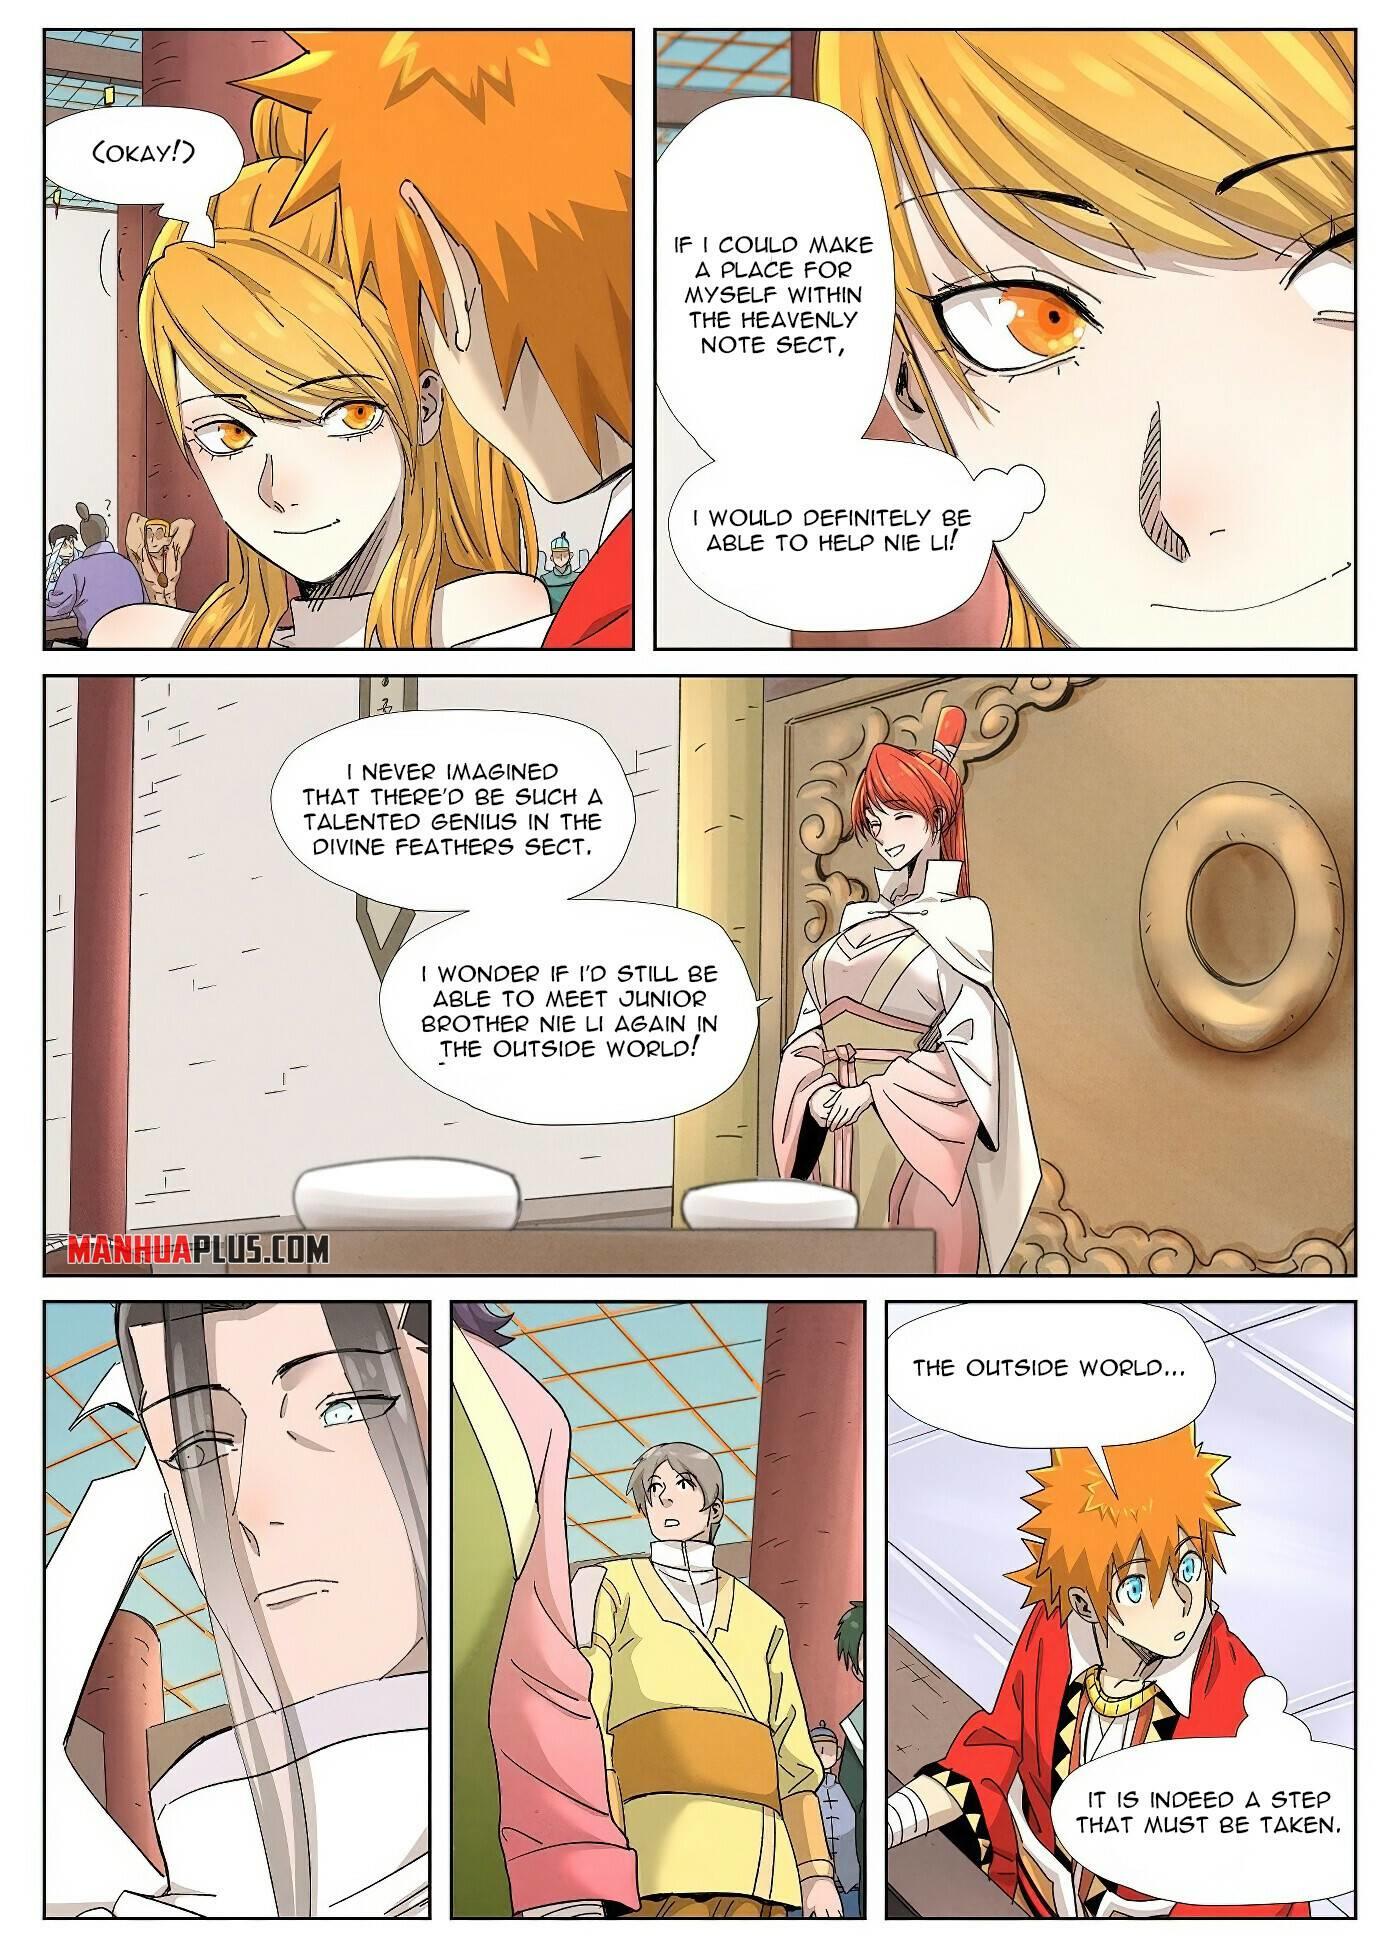 Tales Of Demons And Gods Chapter 342.5 page 7 - Mangakakalot